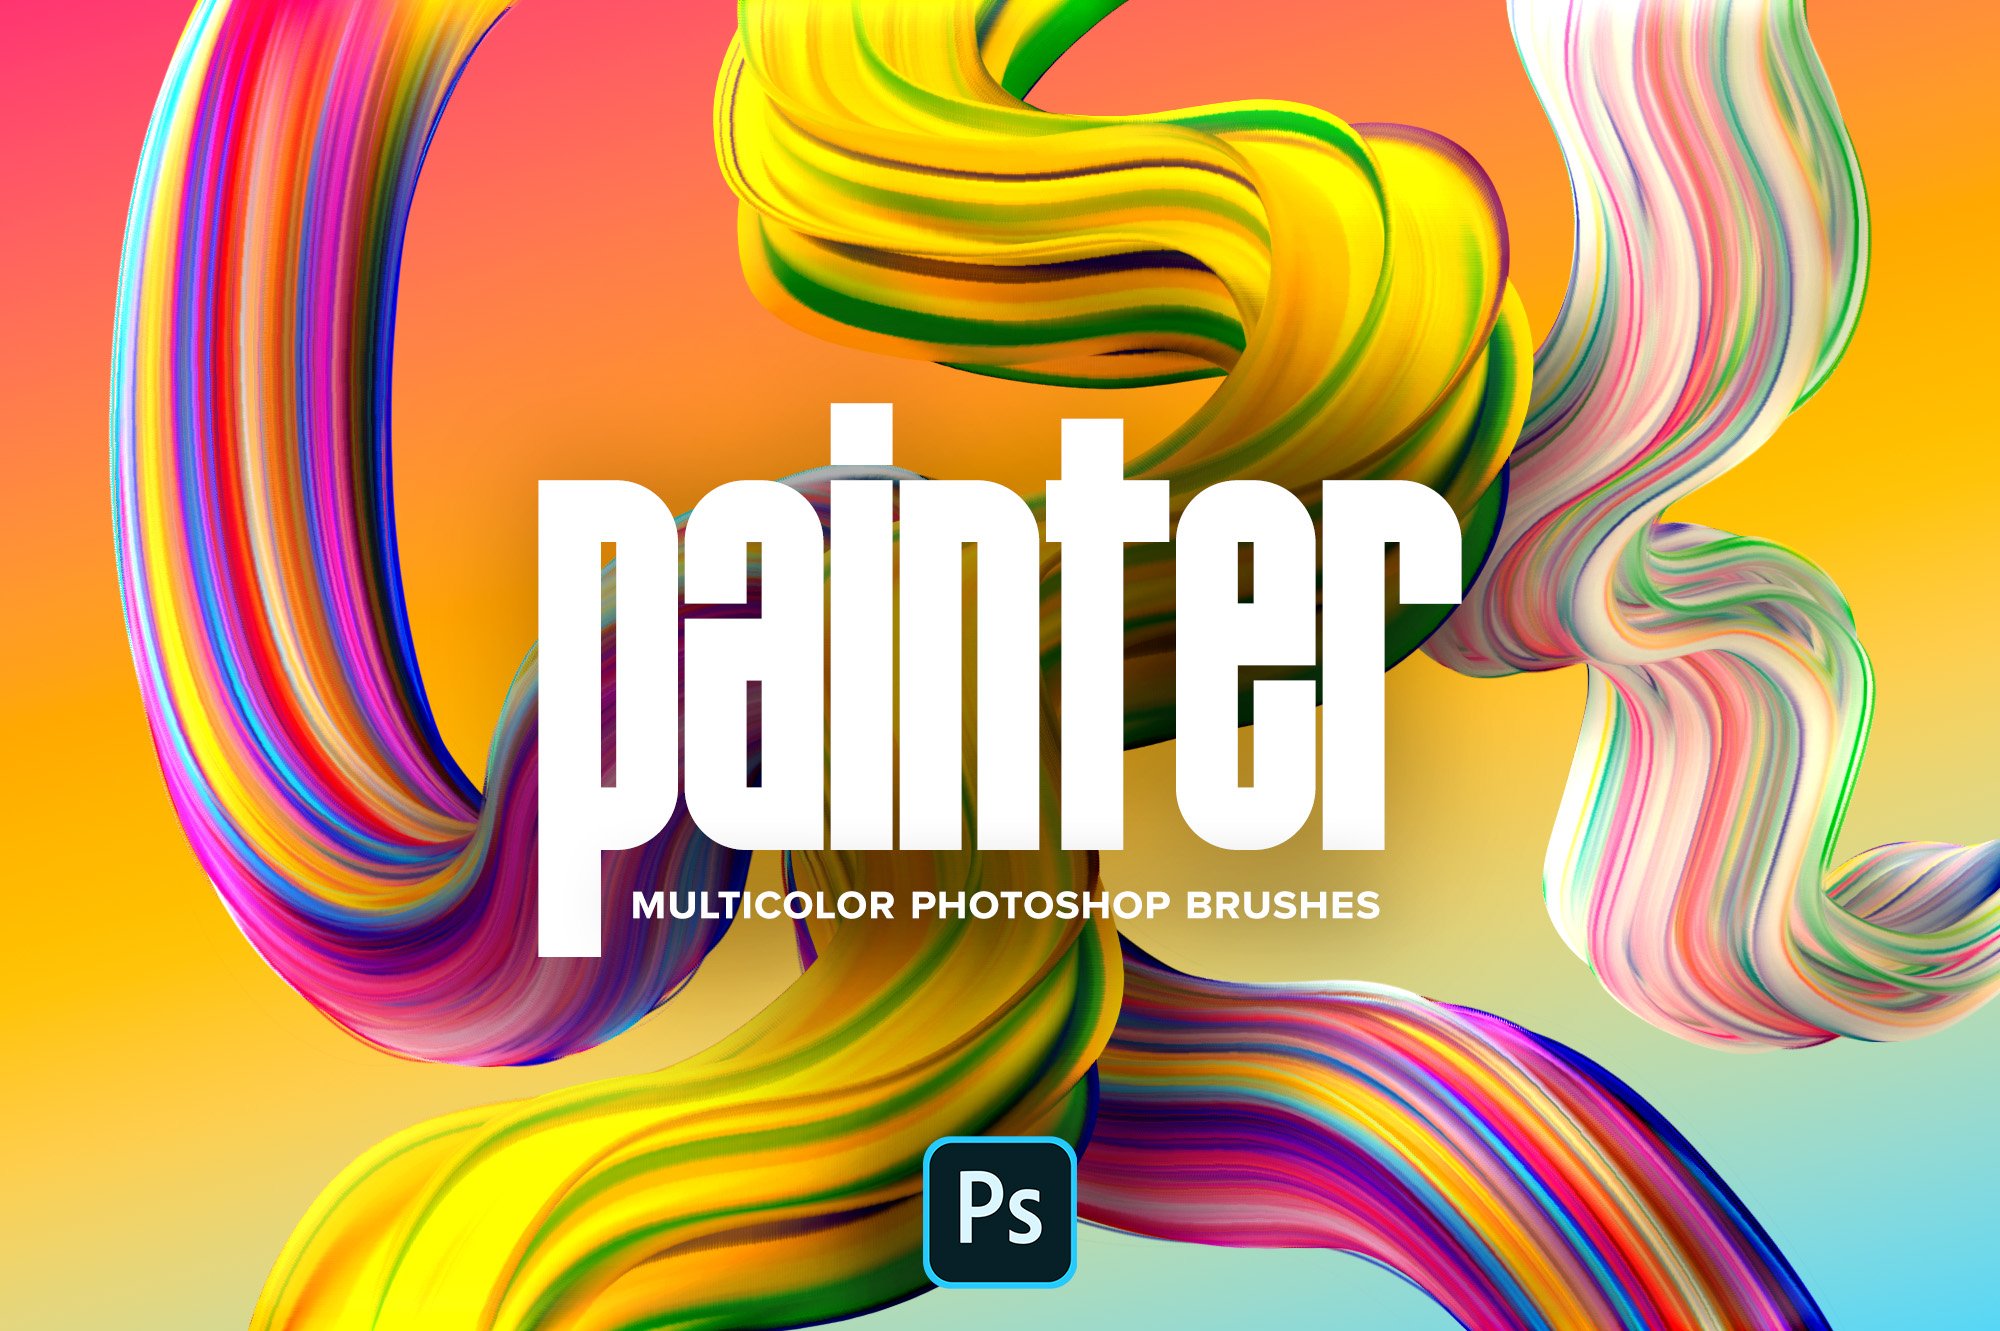 Painter—Multicolor Photoshop Brushescover image.